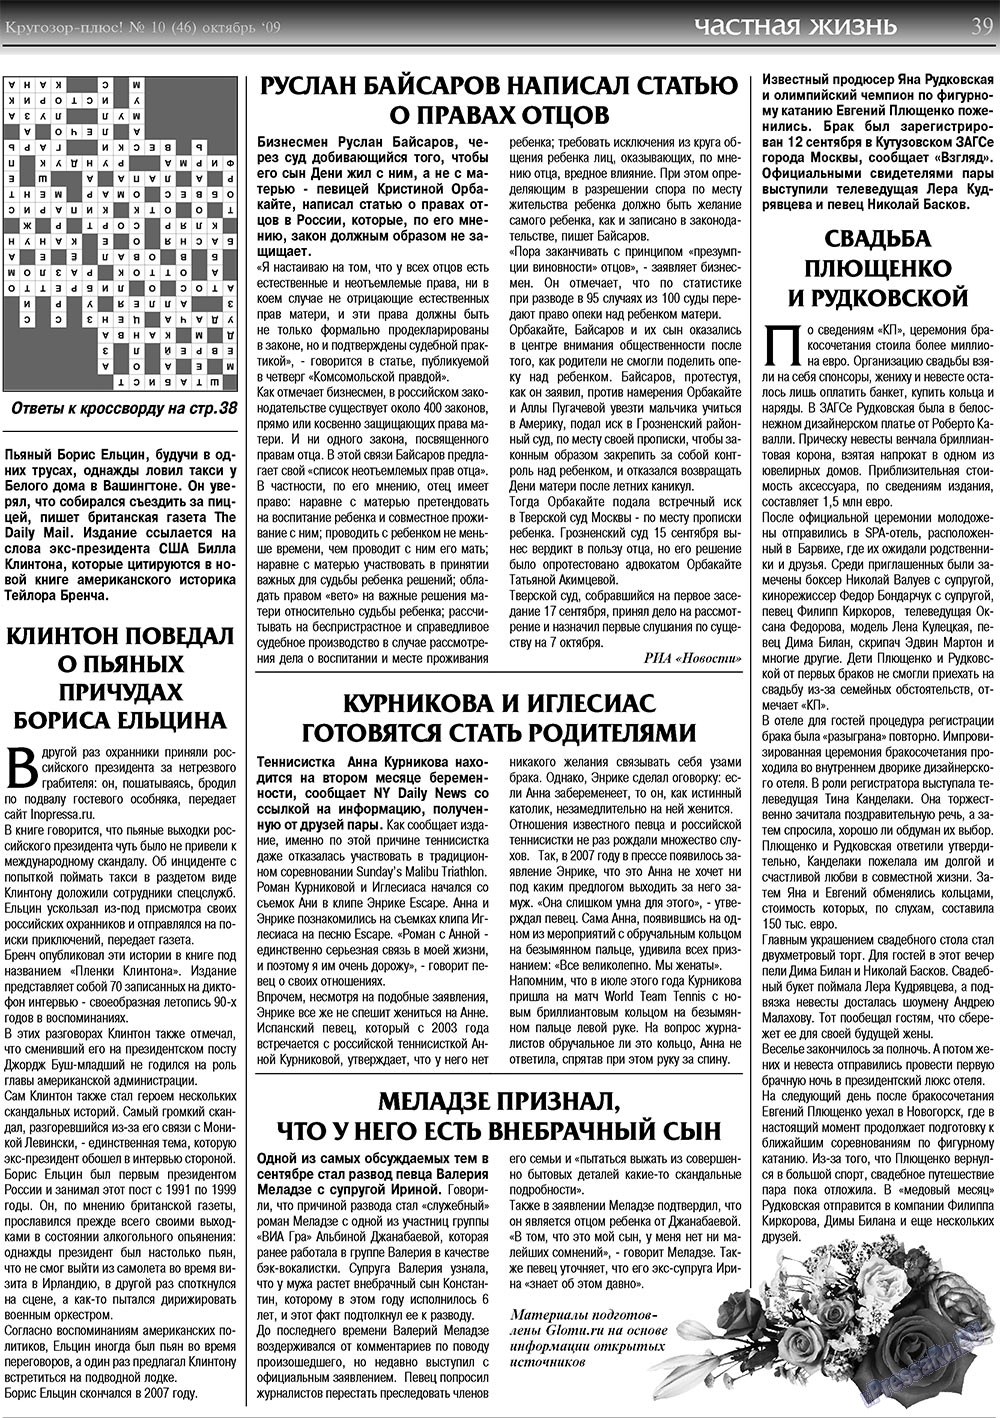 Кругозор плюс! (газета). 2009 год, номер 10, стр. 39